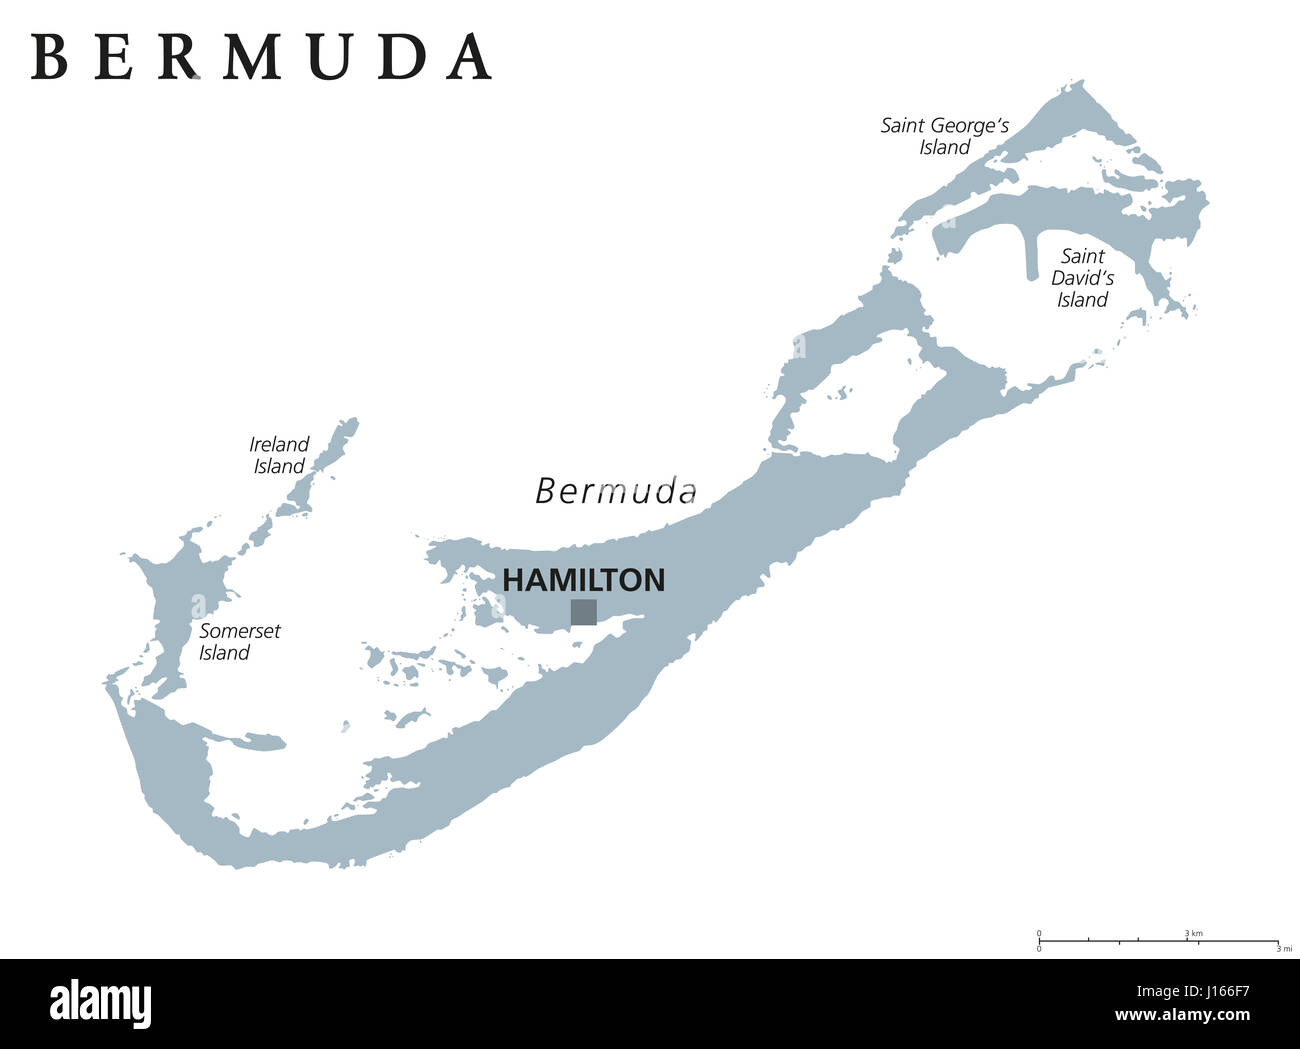 Bermuda political map with capital Hamilton. British Overseas Territory in the North Atlantic Ocean. Member of the Caribbean Community. Illustration. Stock Photo